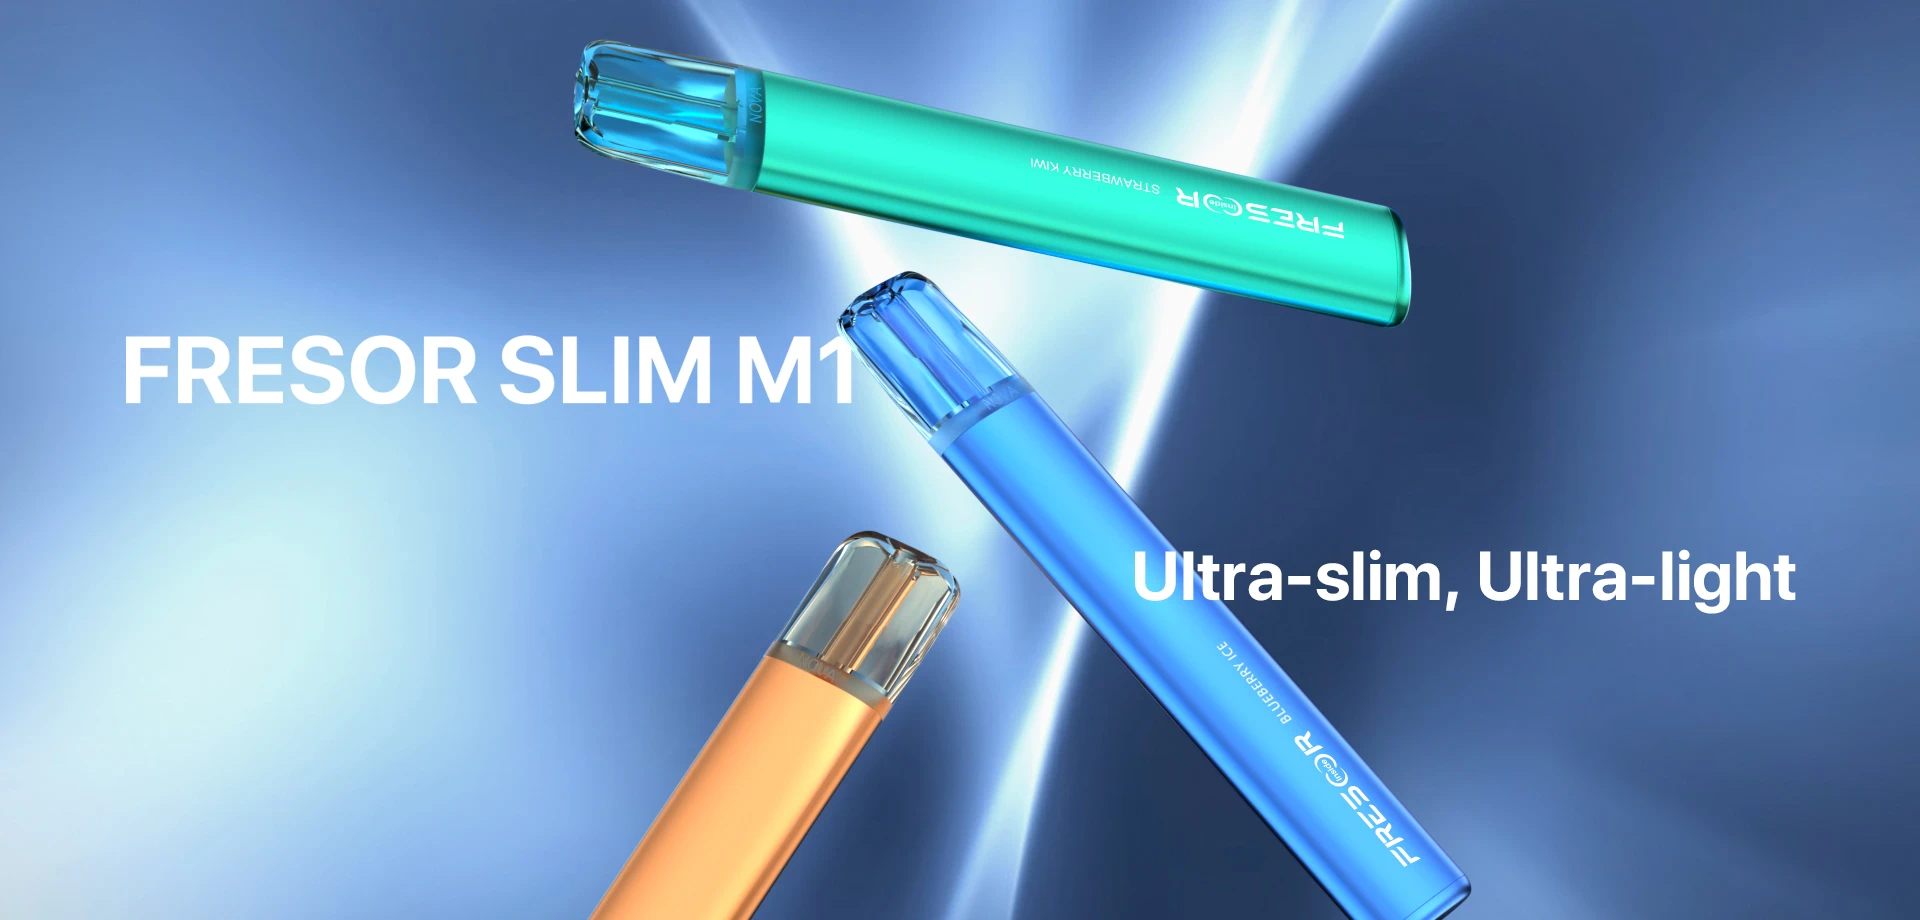 FRESOR SLIM M1 - Ultra-slim, Ultra-light